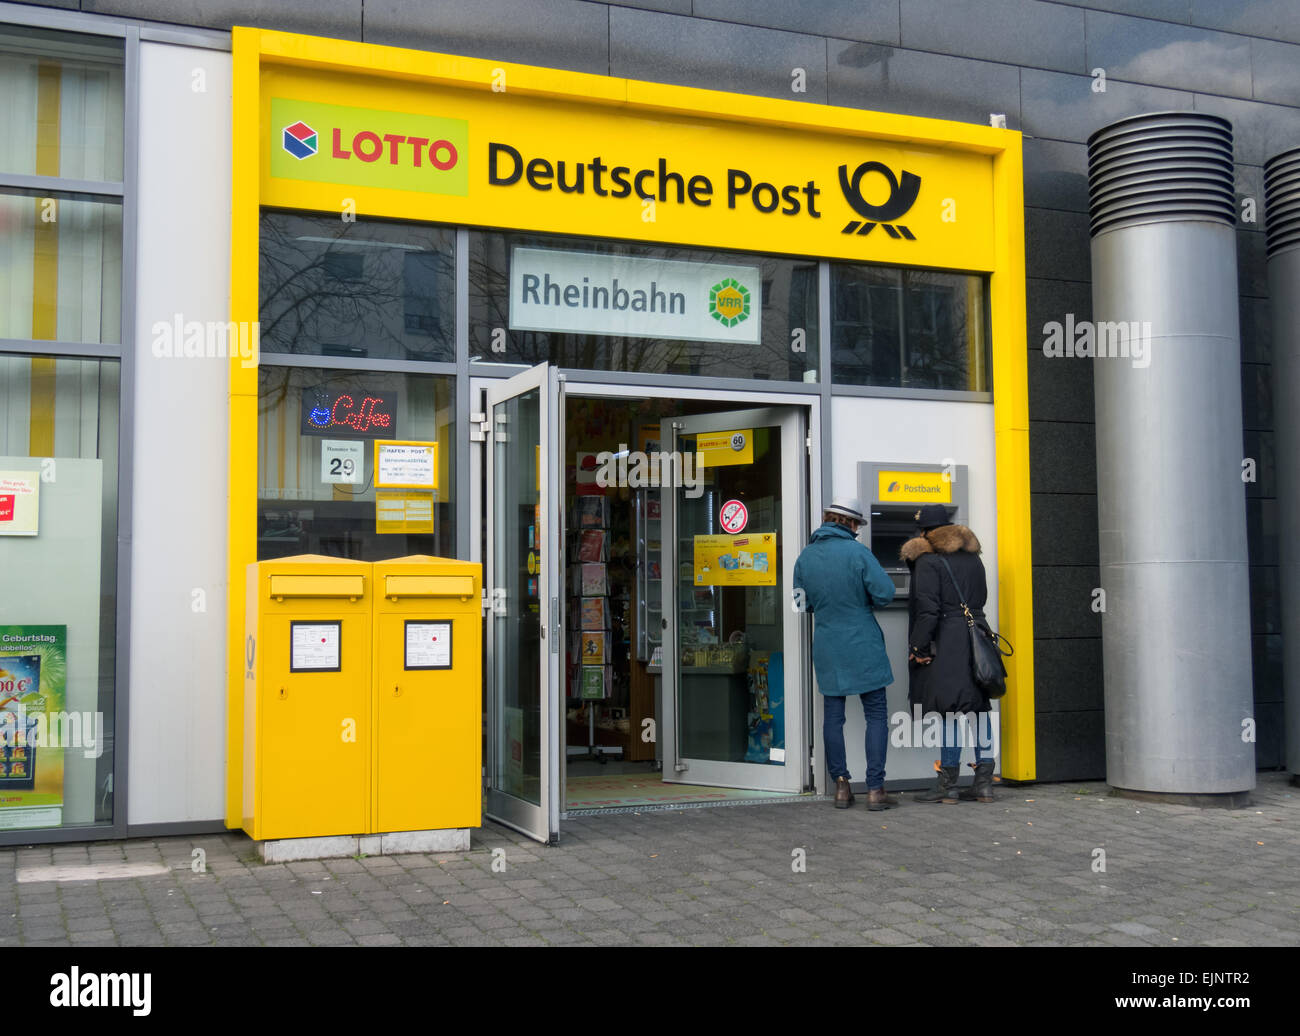 German Shop